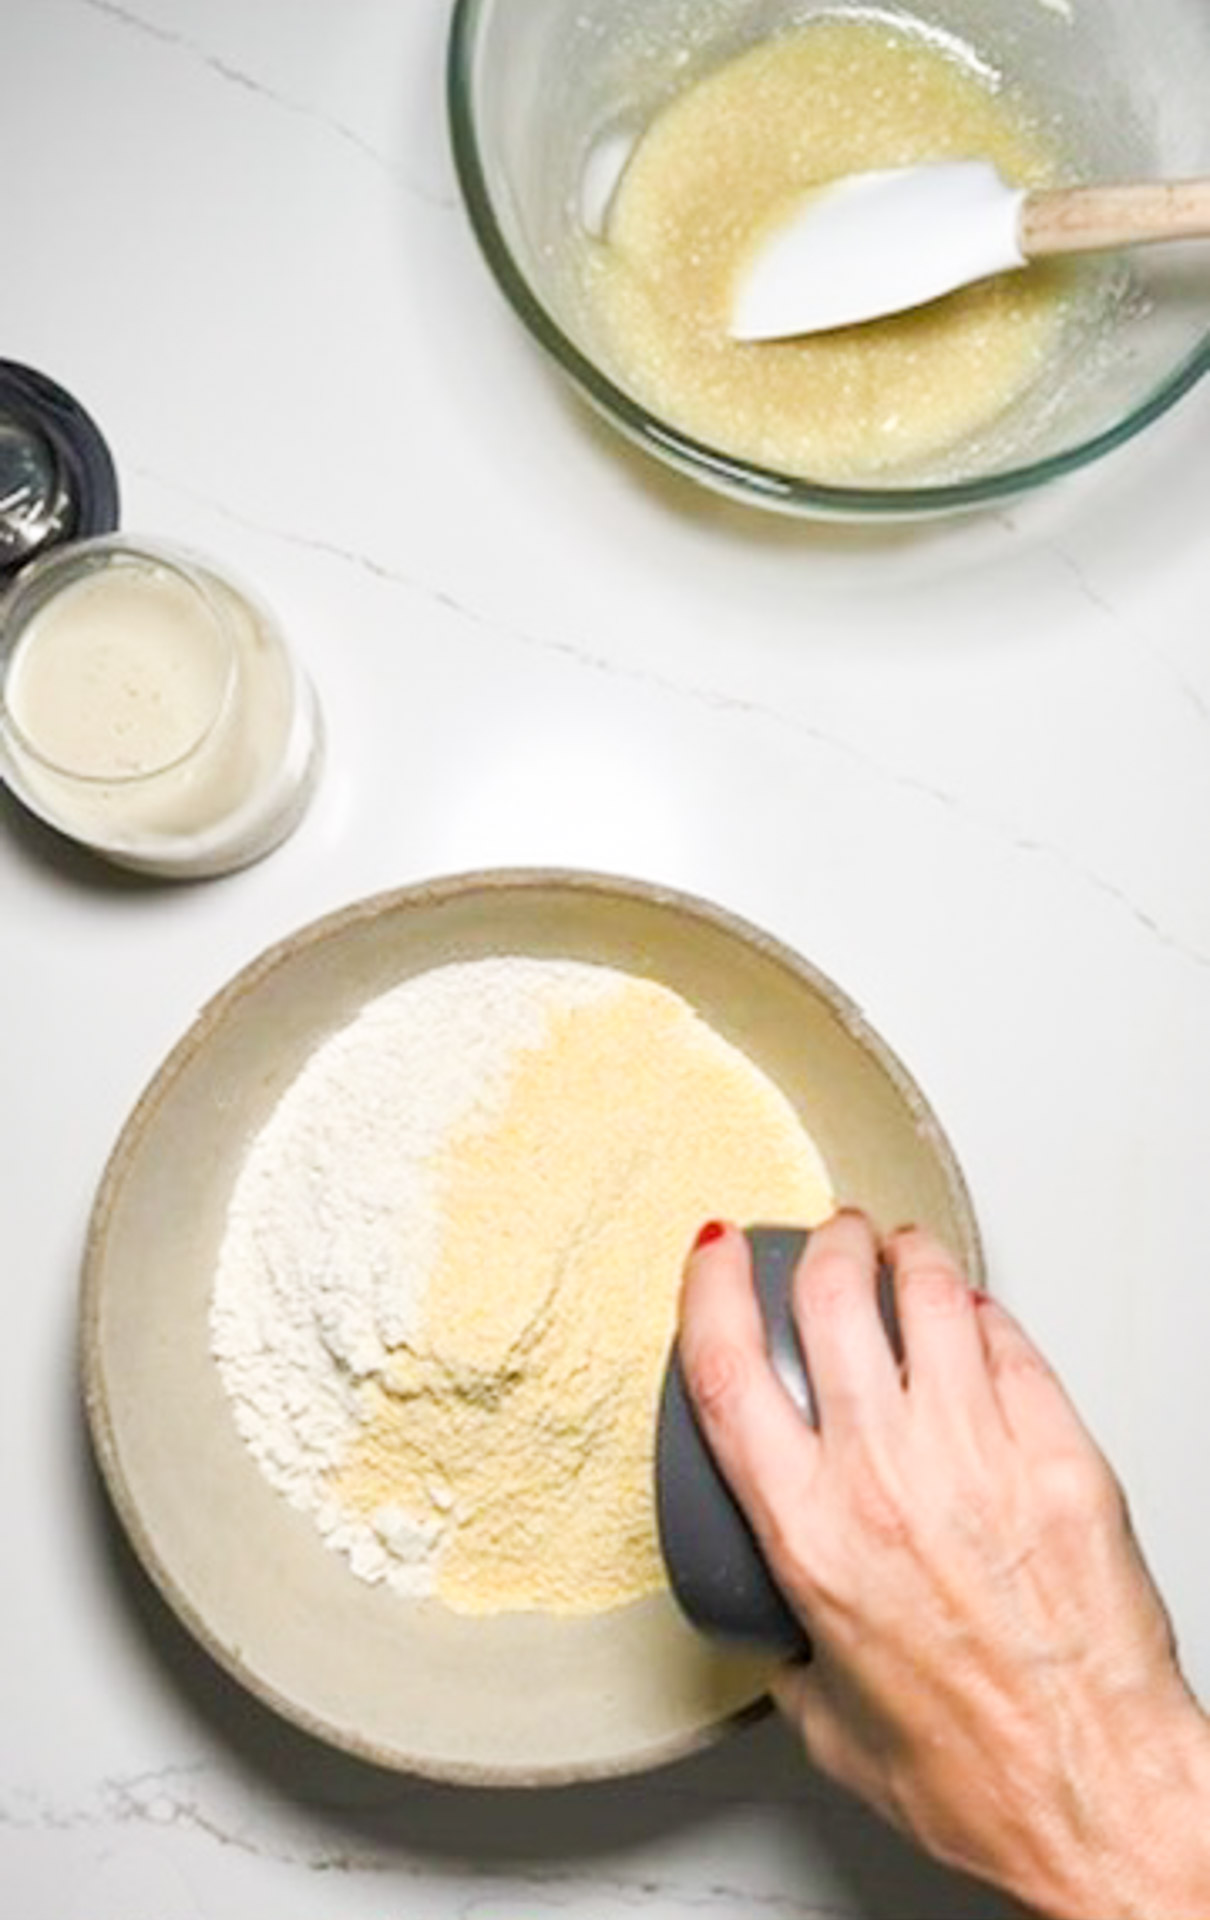 A vegan person mixing ingredients in a bowl to prepare a cornbread recipe.